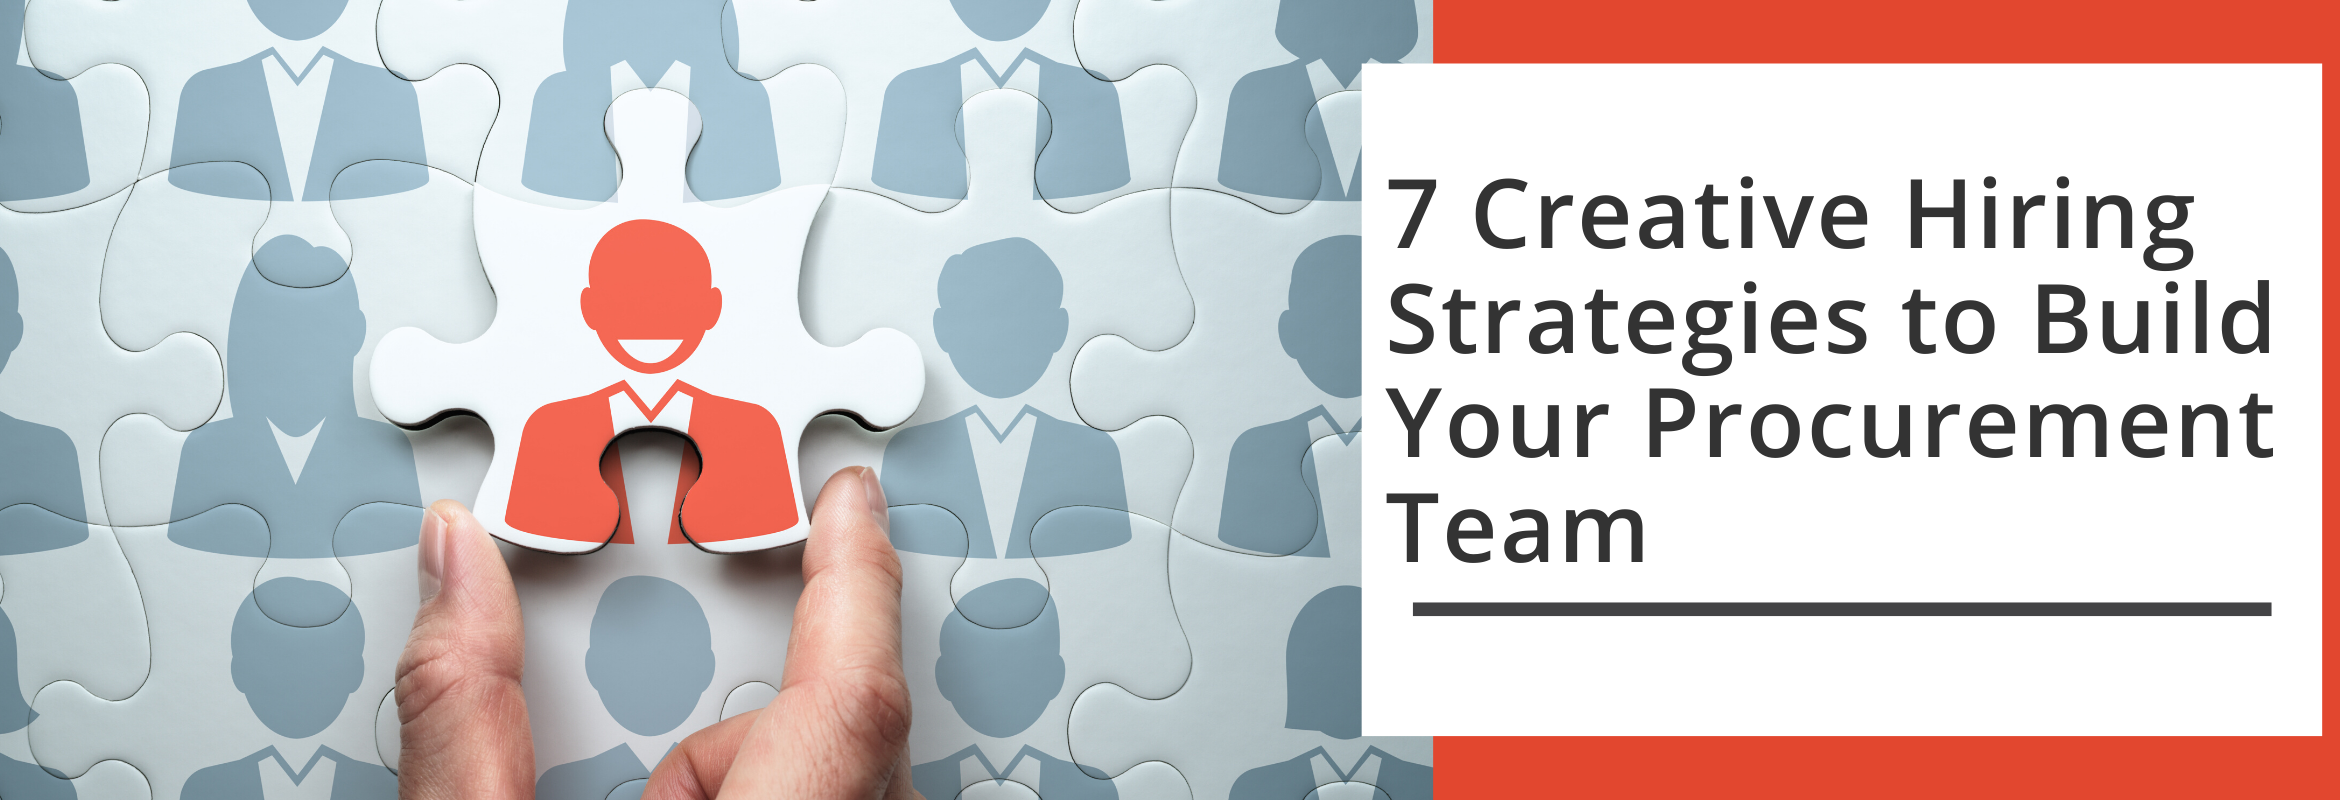 7 Creative Hiring Strategies for Building Your Procurement Team